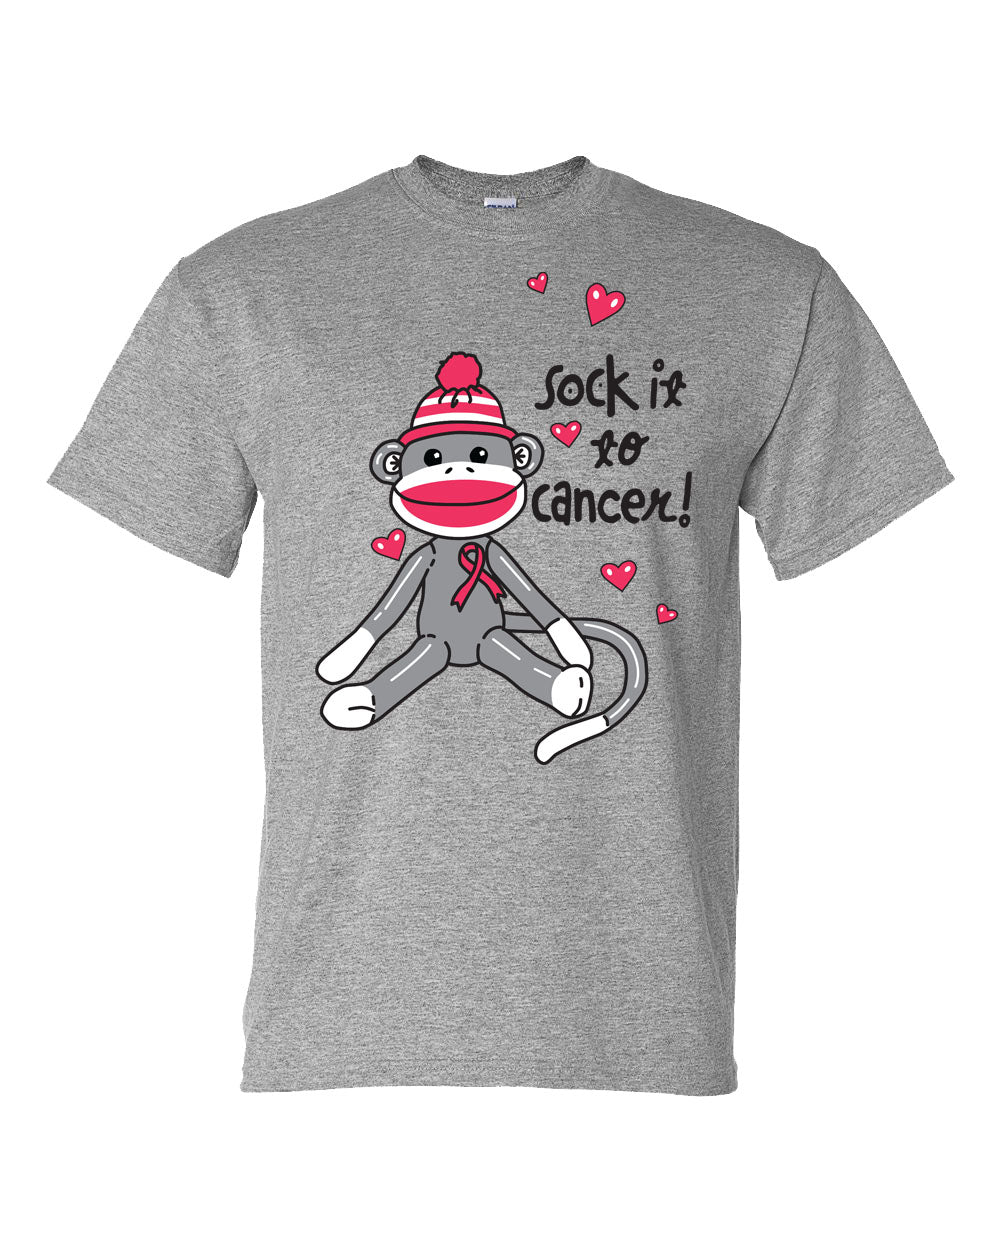 Sock It To Cancer - DryBlend T-shirt